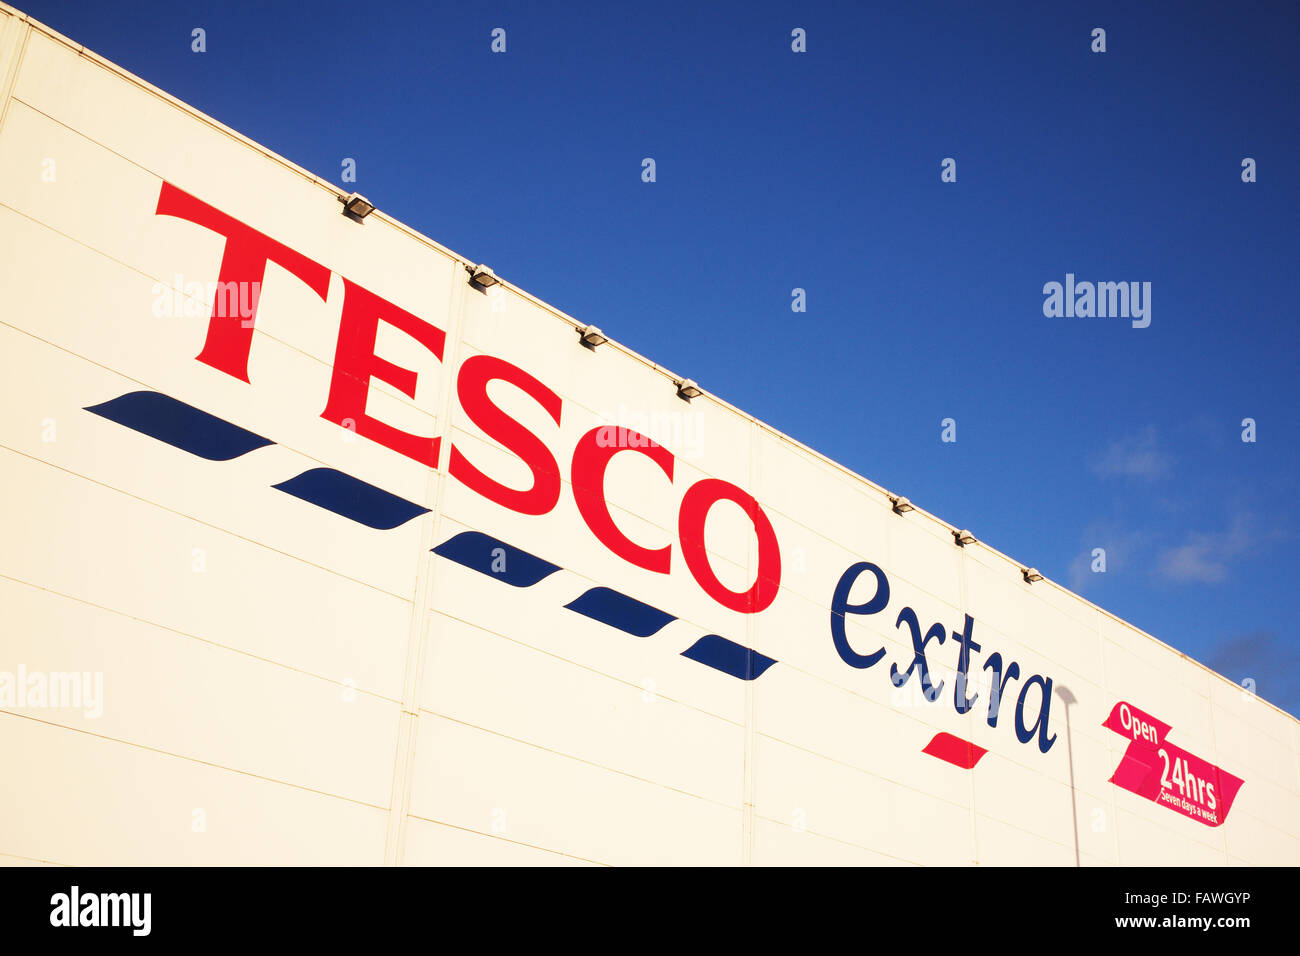 Tesco extra shop sign against a blue sky Stock Photo